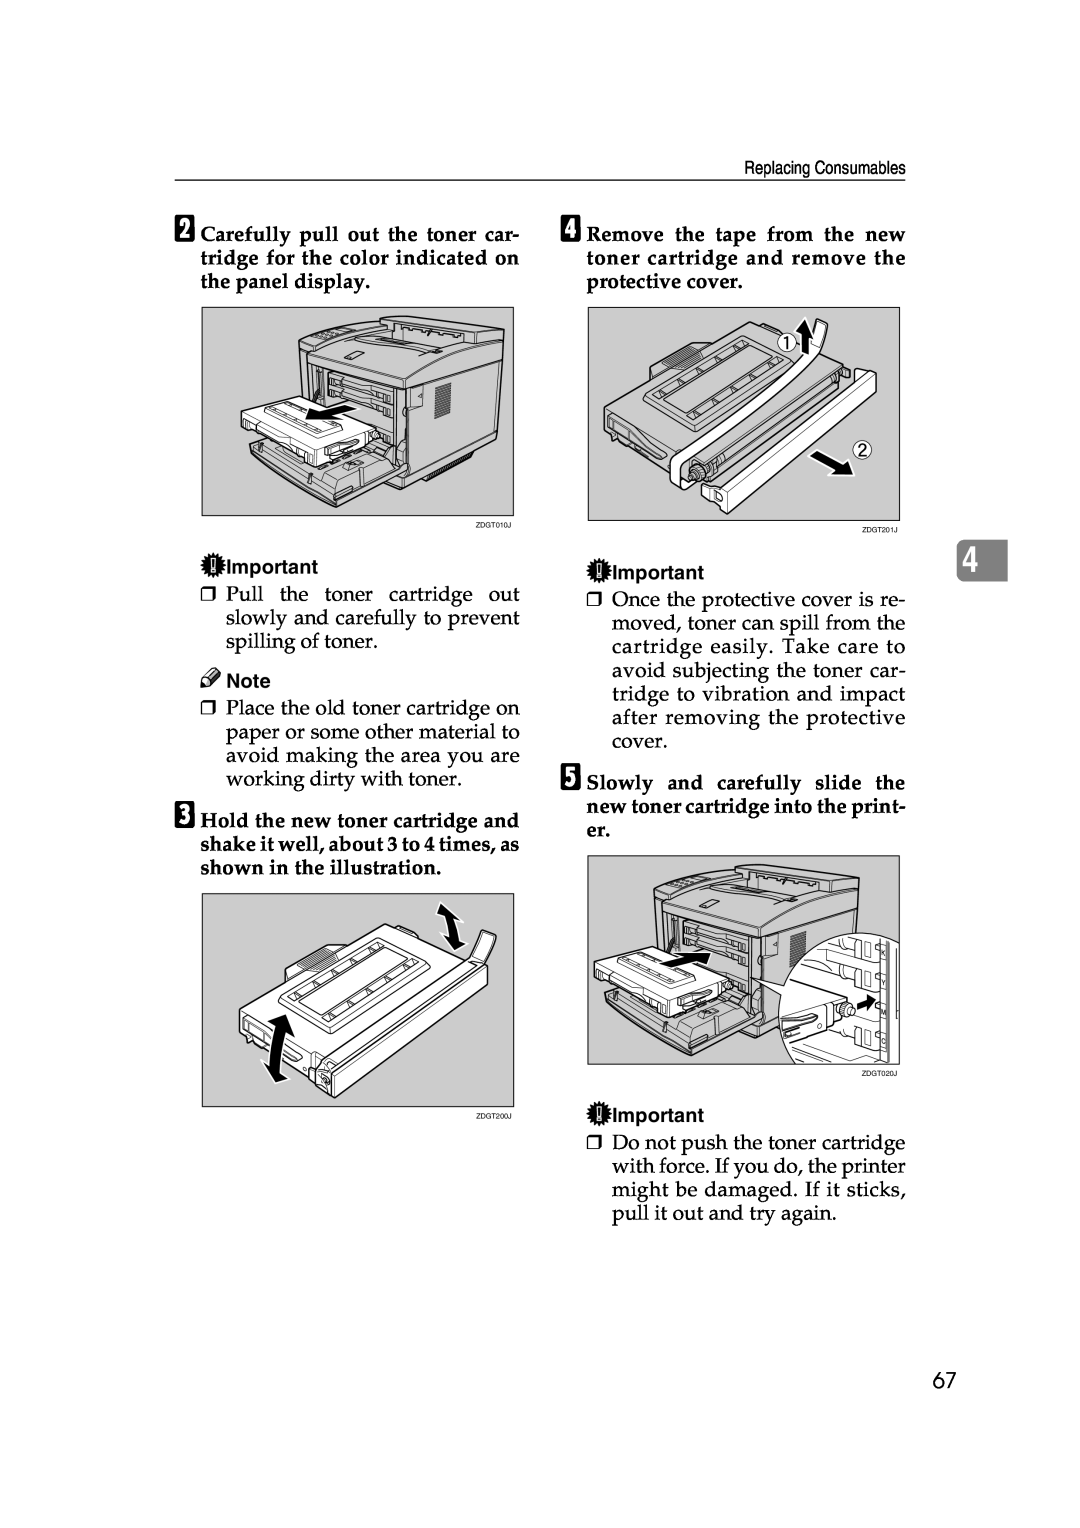 Lanier AP206 manual Important4, Replacing Consumables 